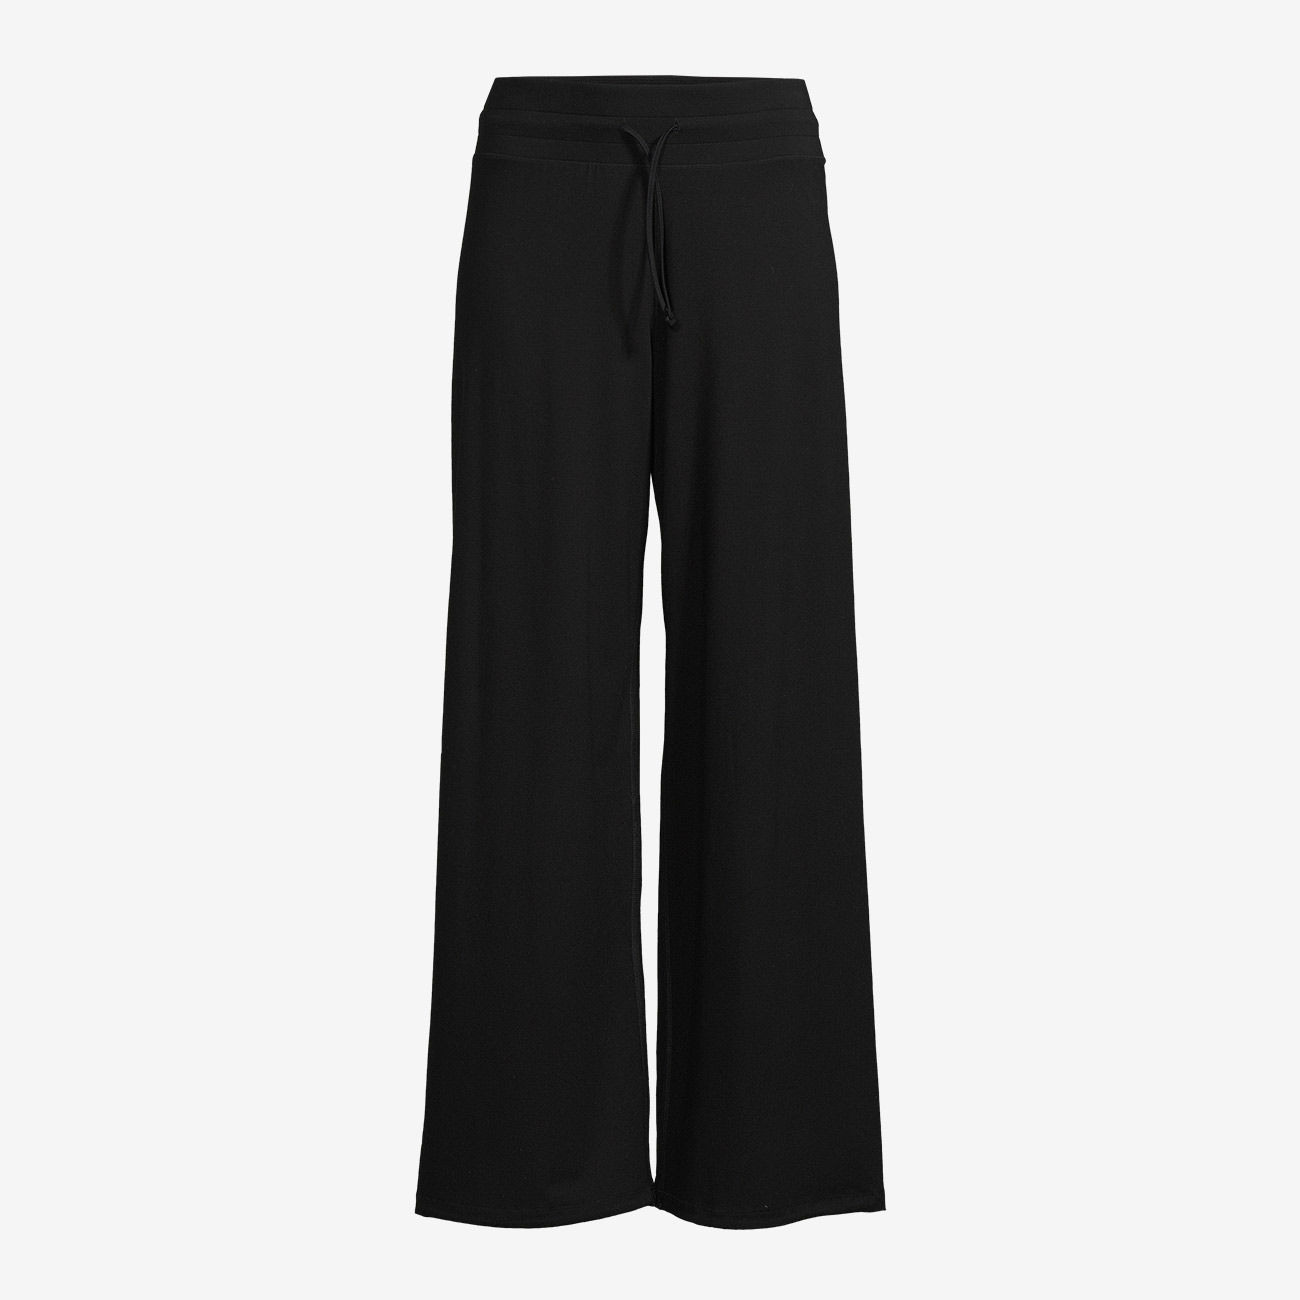 Studio Pants - Black | Yoga Pants | Bottoms | Women's Clothing | YOGA ...